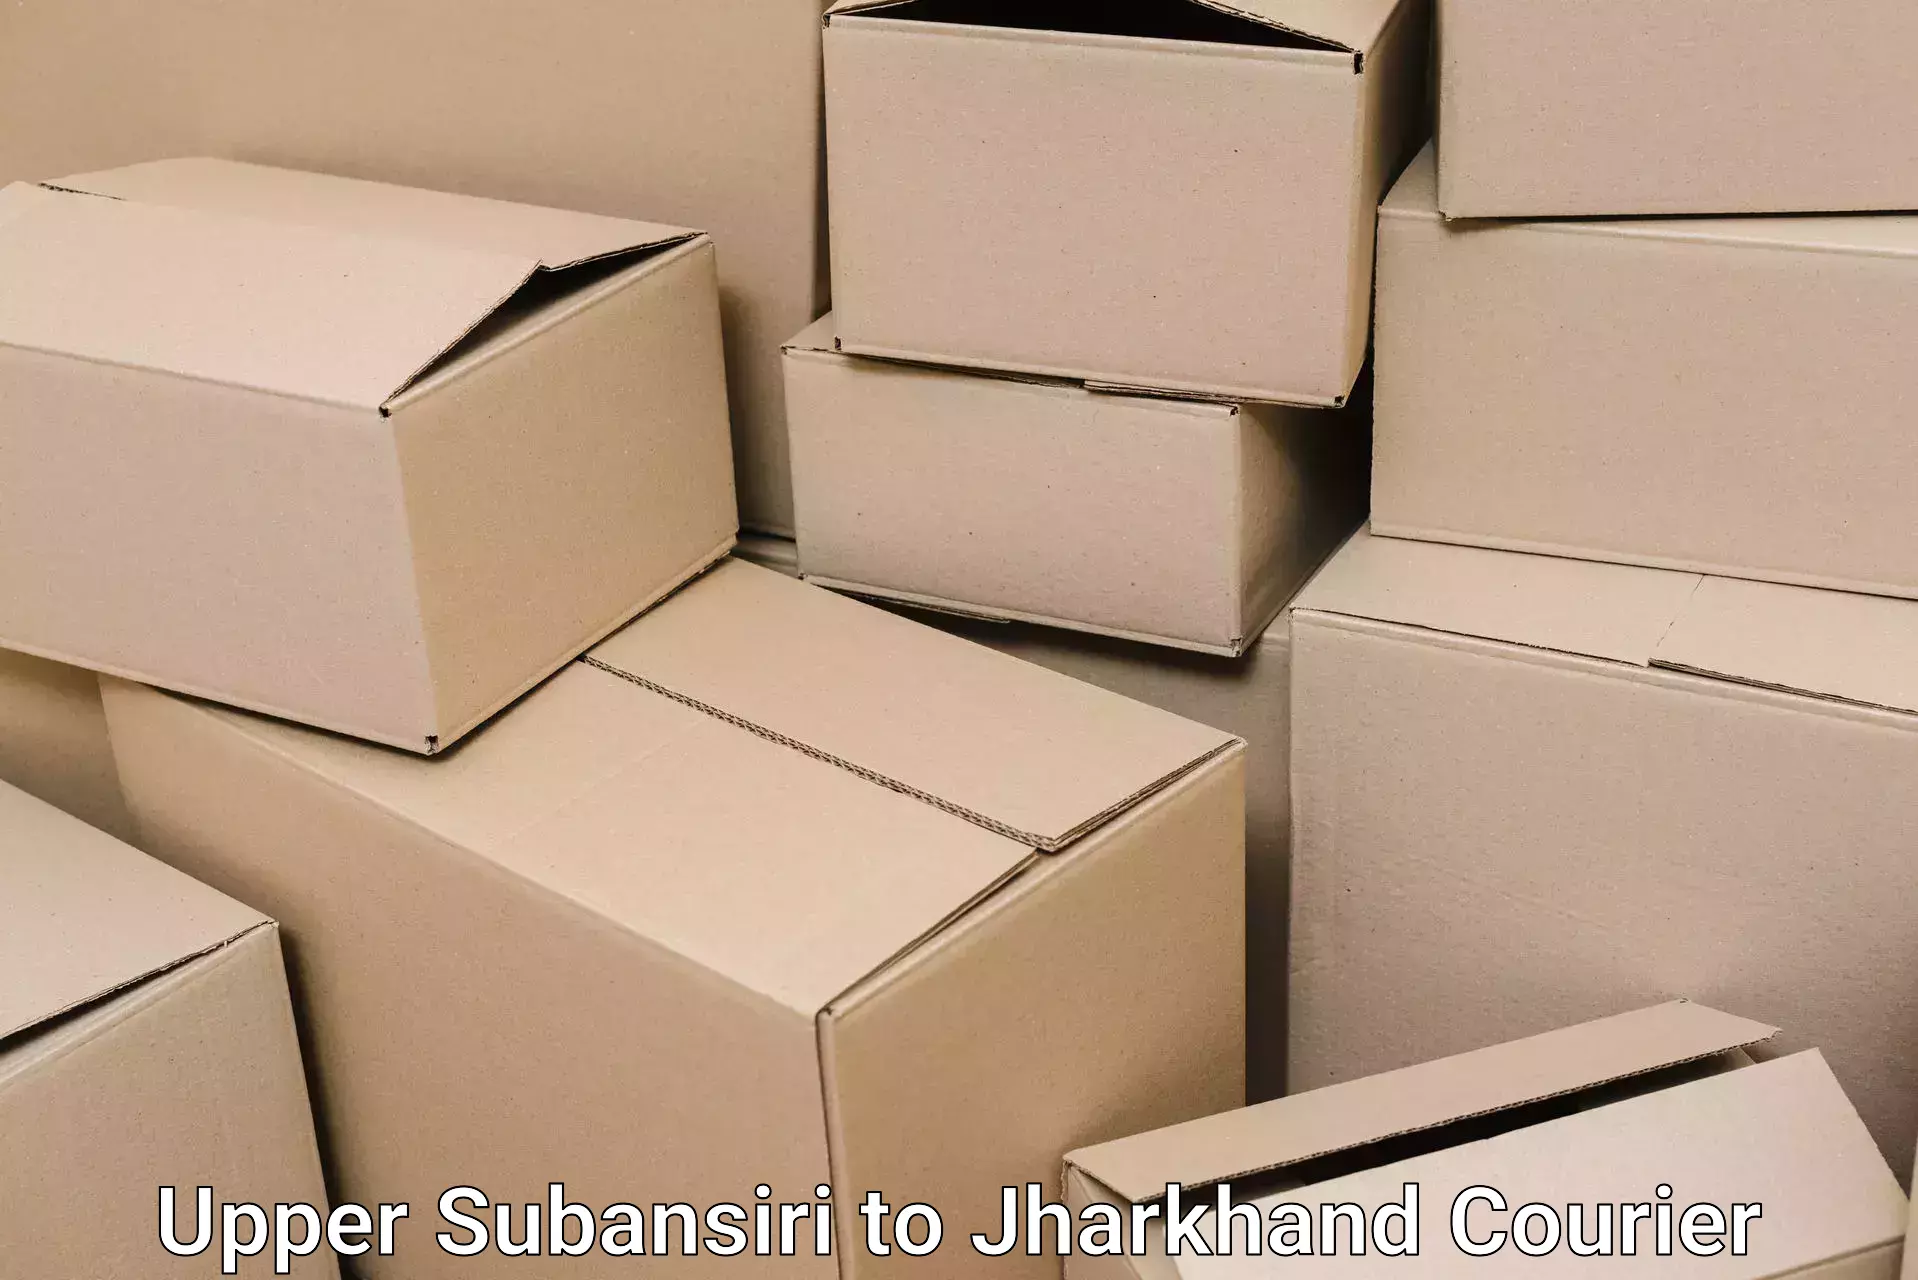 Furniture relocation experts Upper Subansiri to East Singhbhum